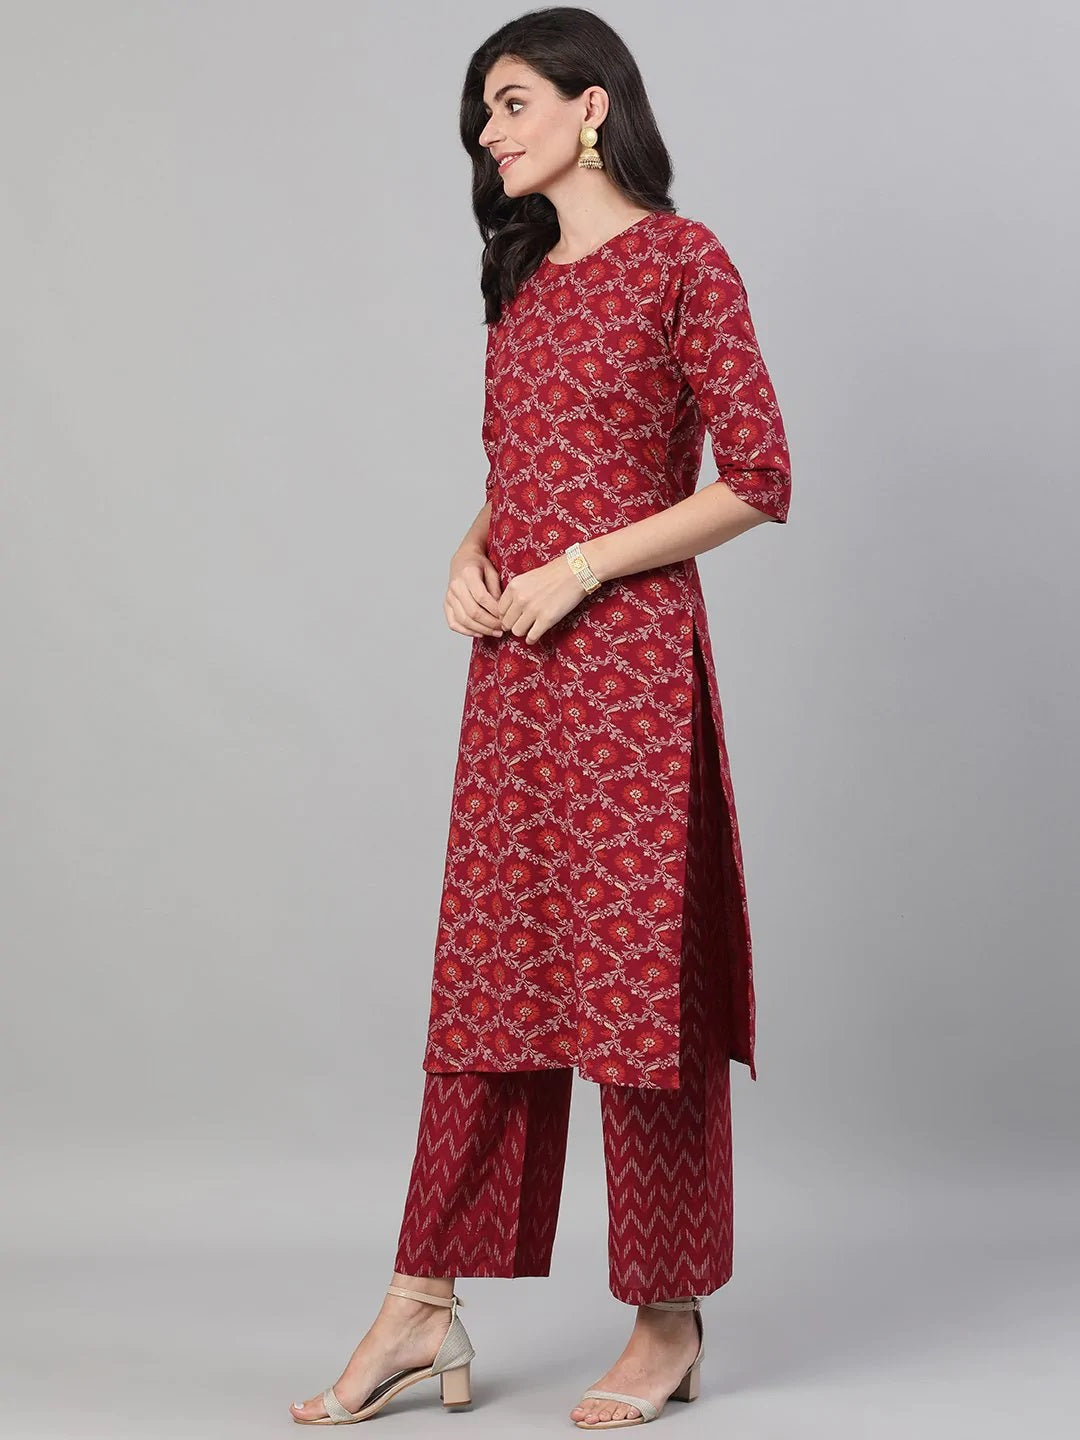 Women's Red Flower Print Cotton Kurta Set Collection - Dwija Fashion